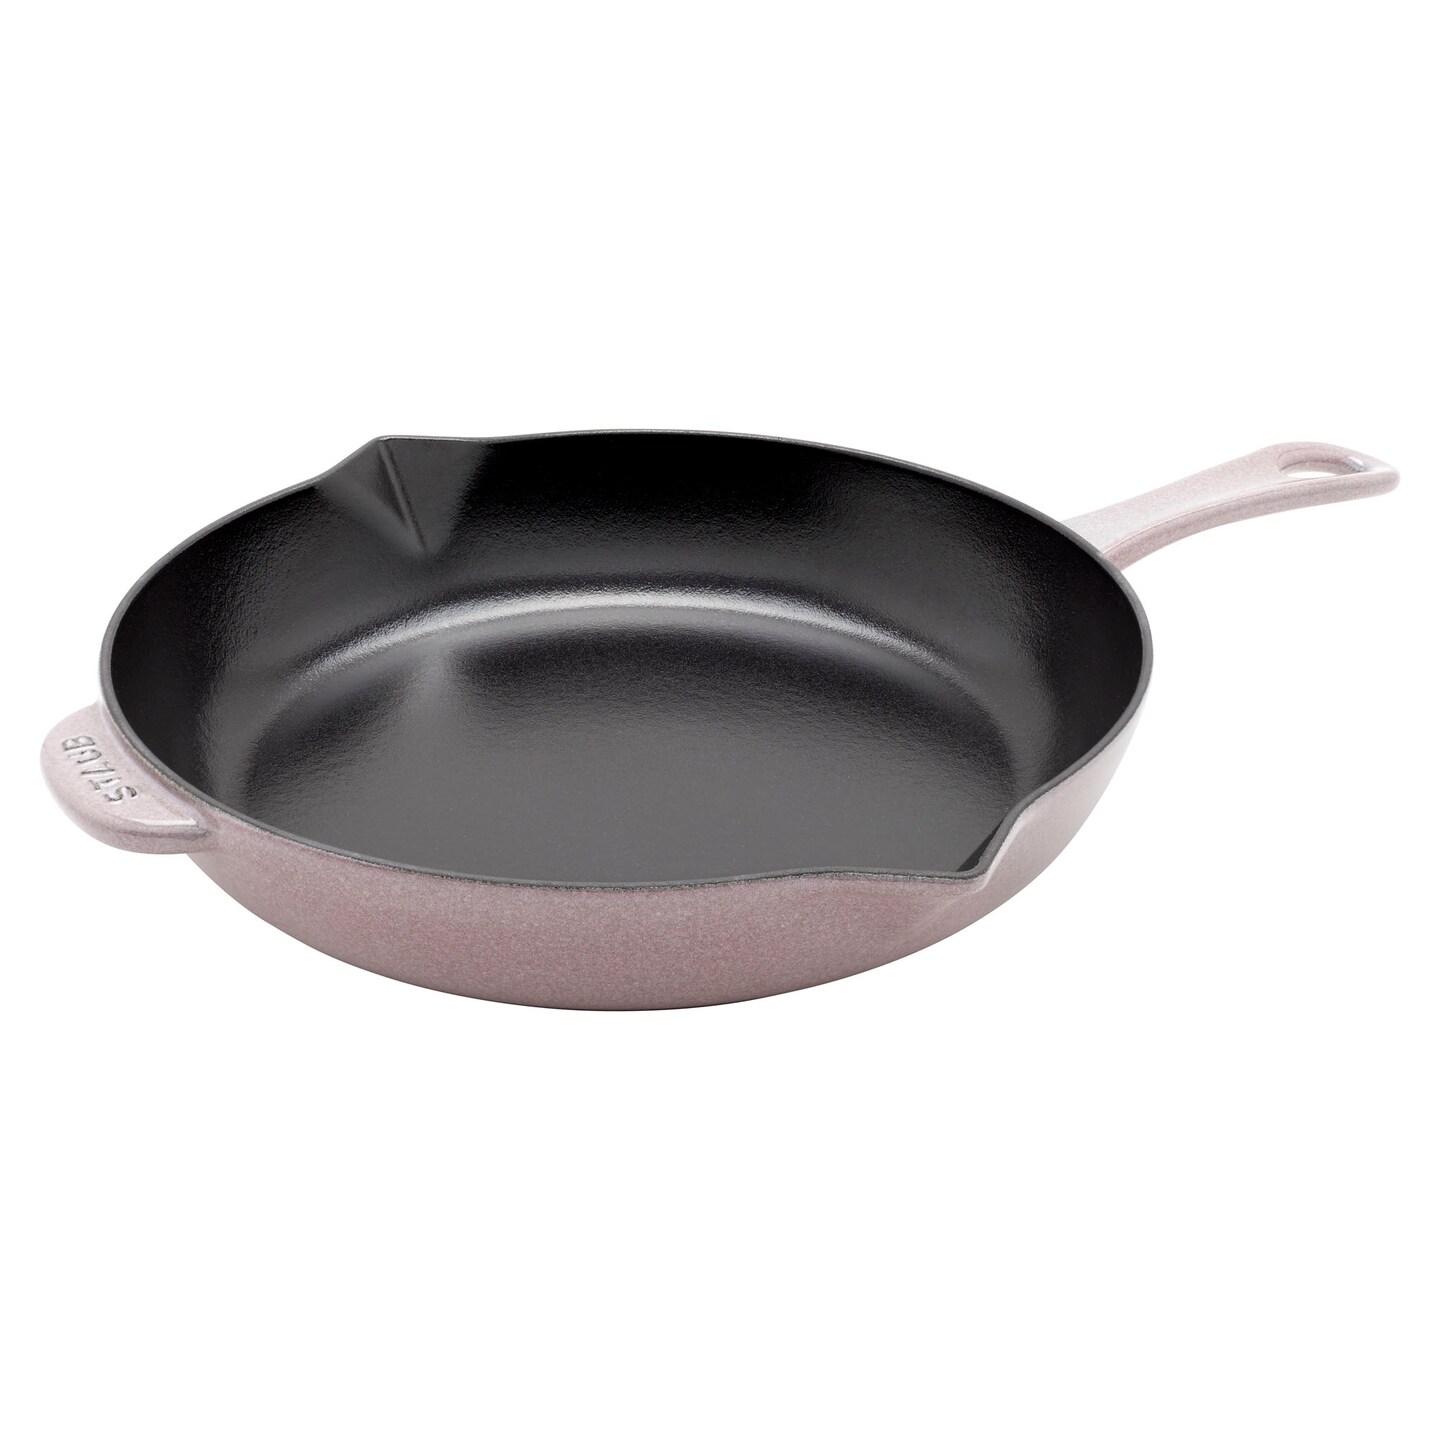 STAUB Cast Iron 10-inch Fry Pan